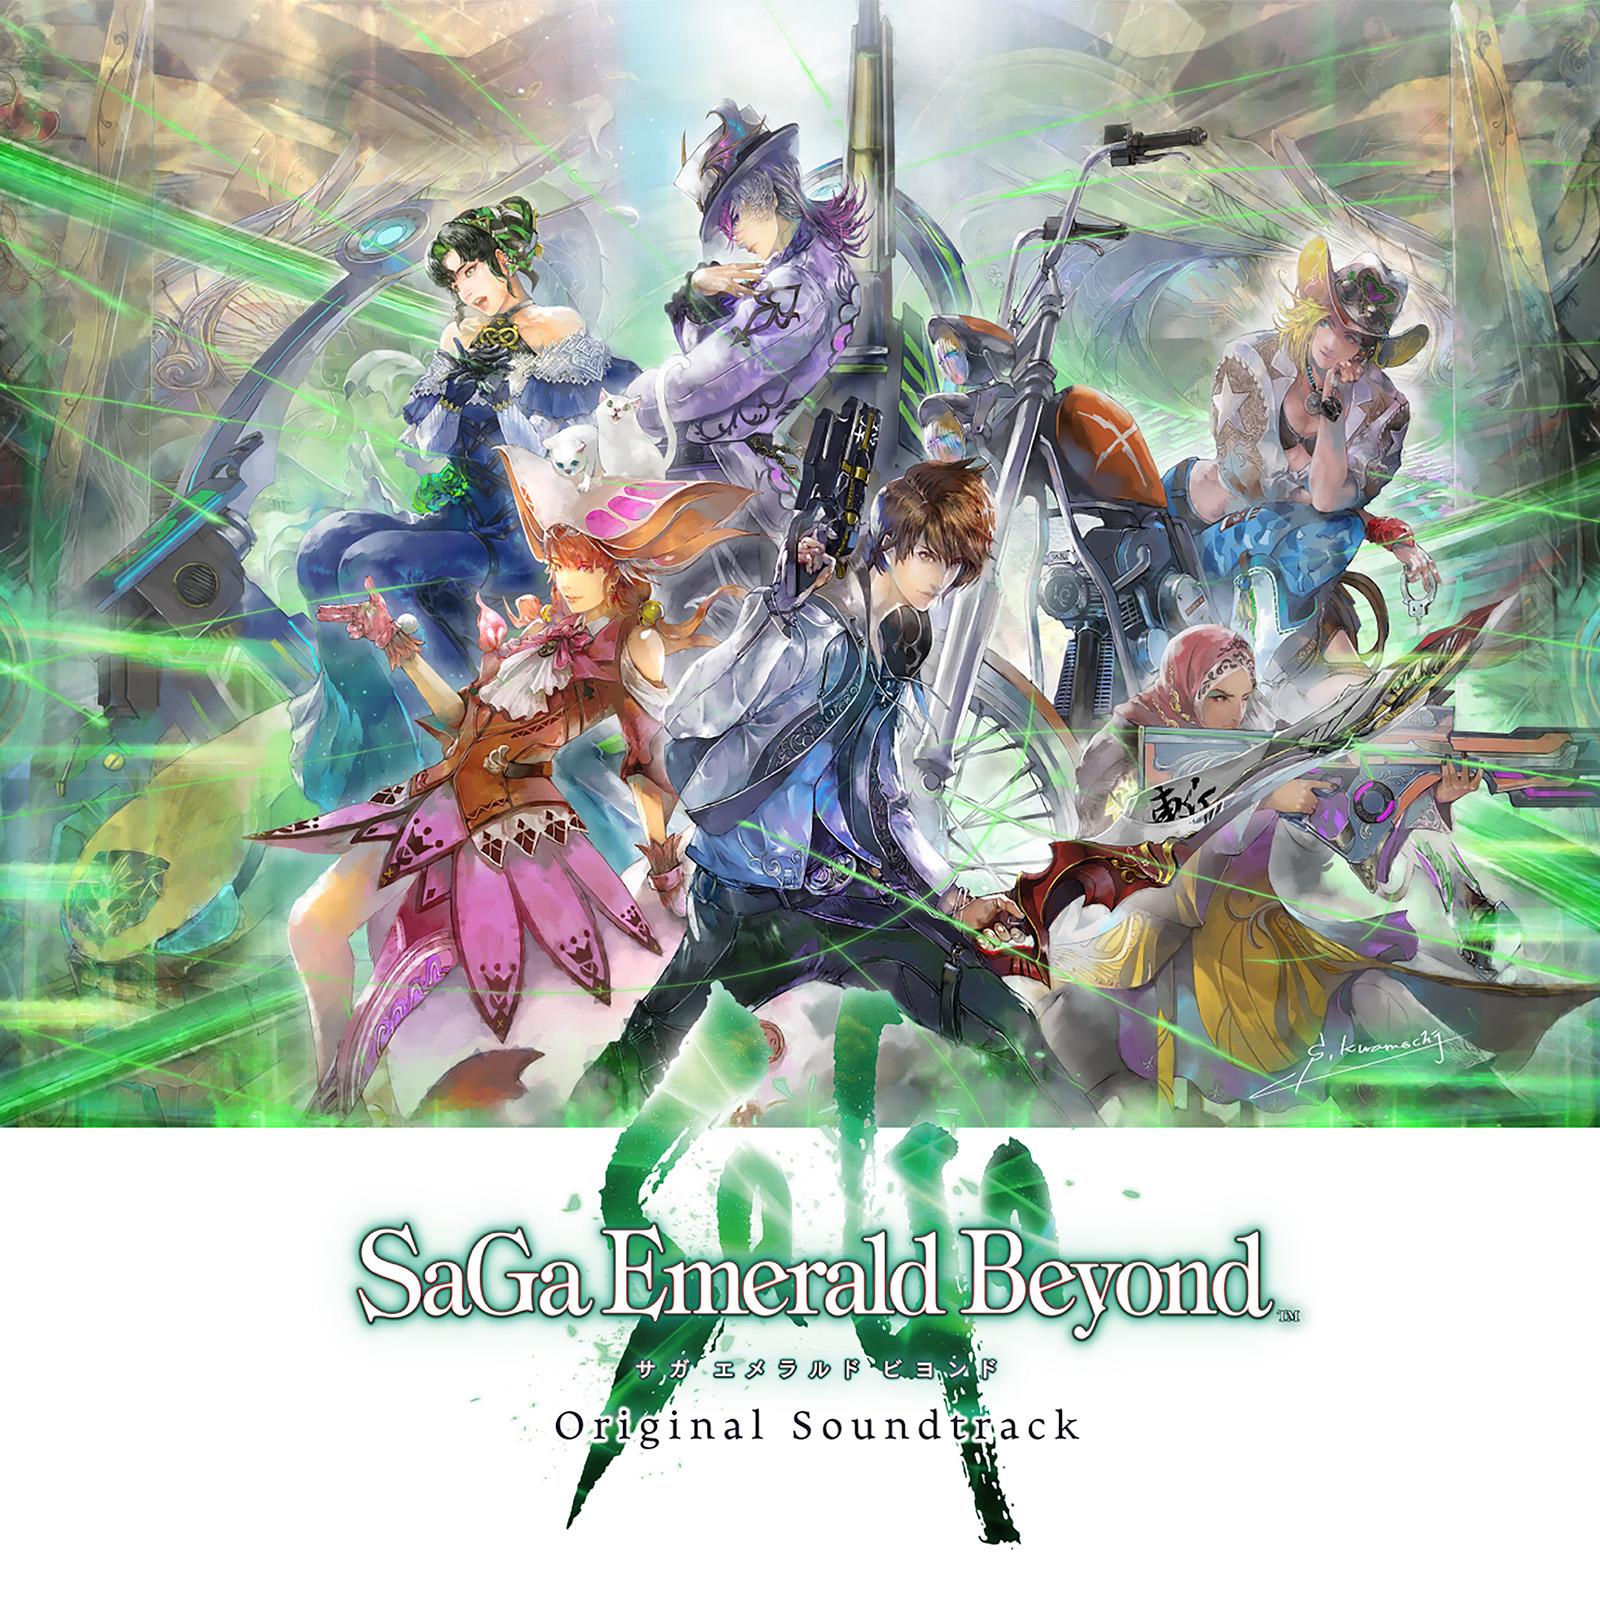 SaGa: Emerald Beyond Original Soundtrack